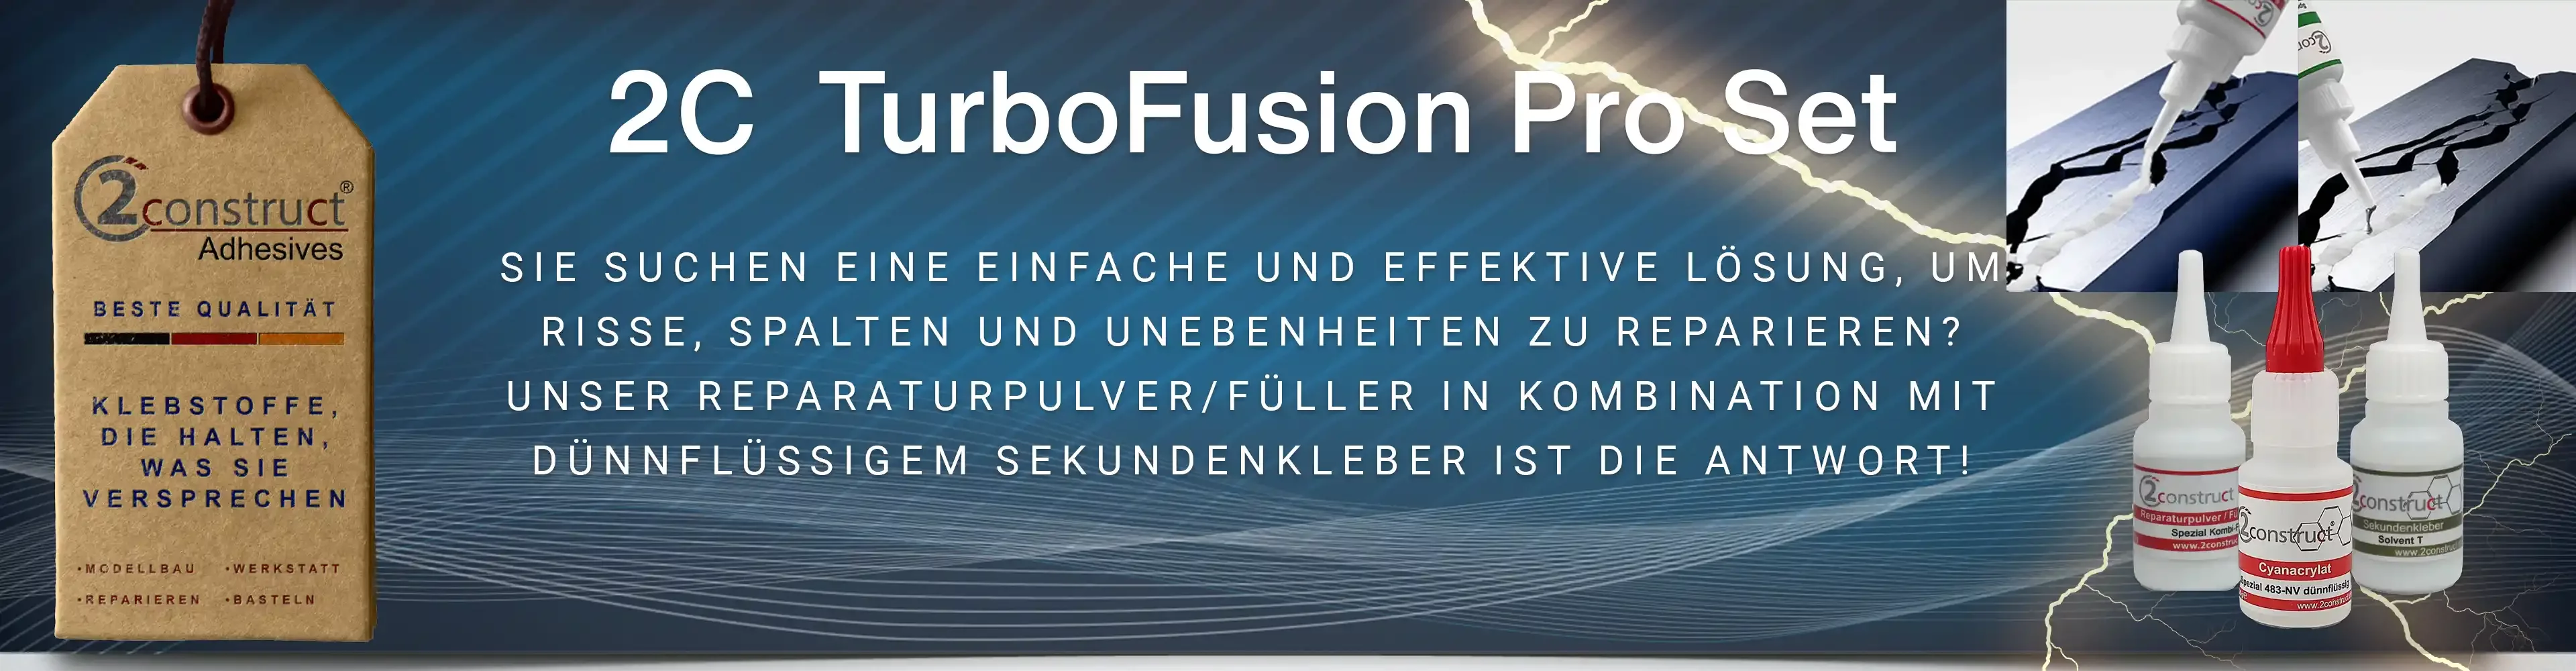  TurboFusion Pro Set